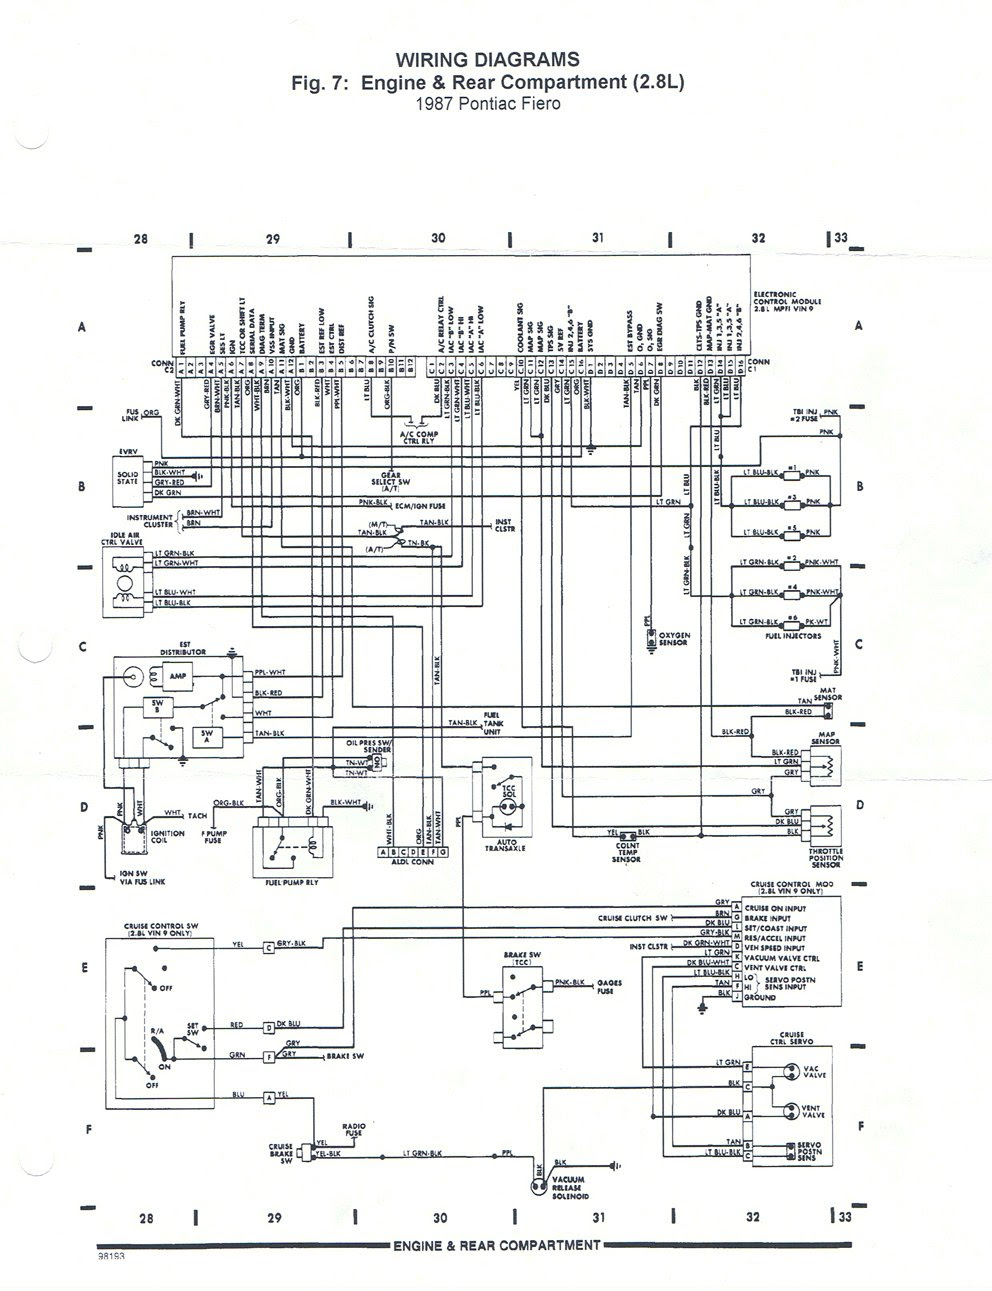 1984 Pontiac Fiero Wiring Diagram - Wiring Diagram